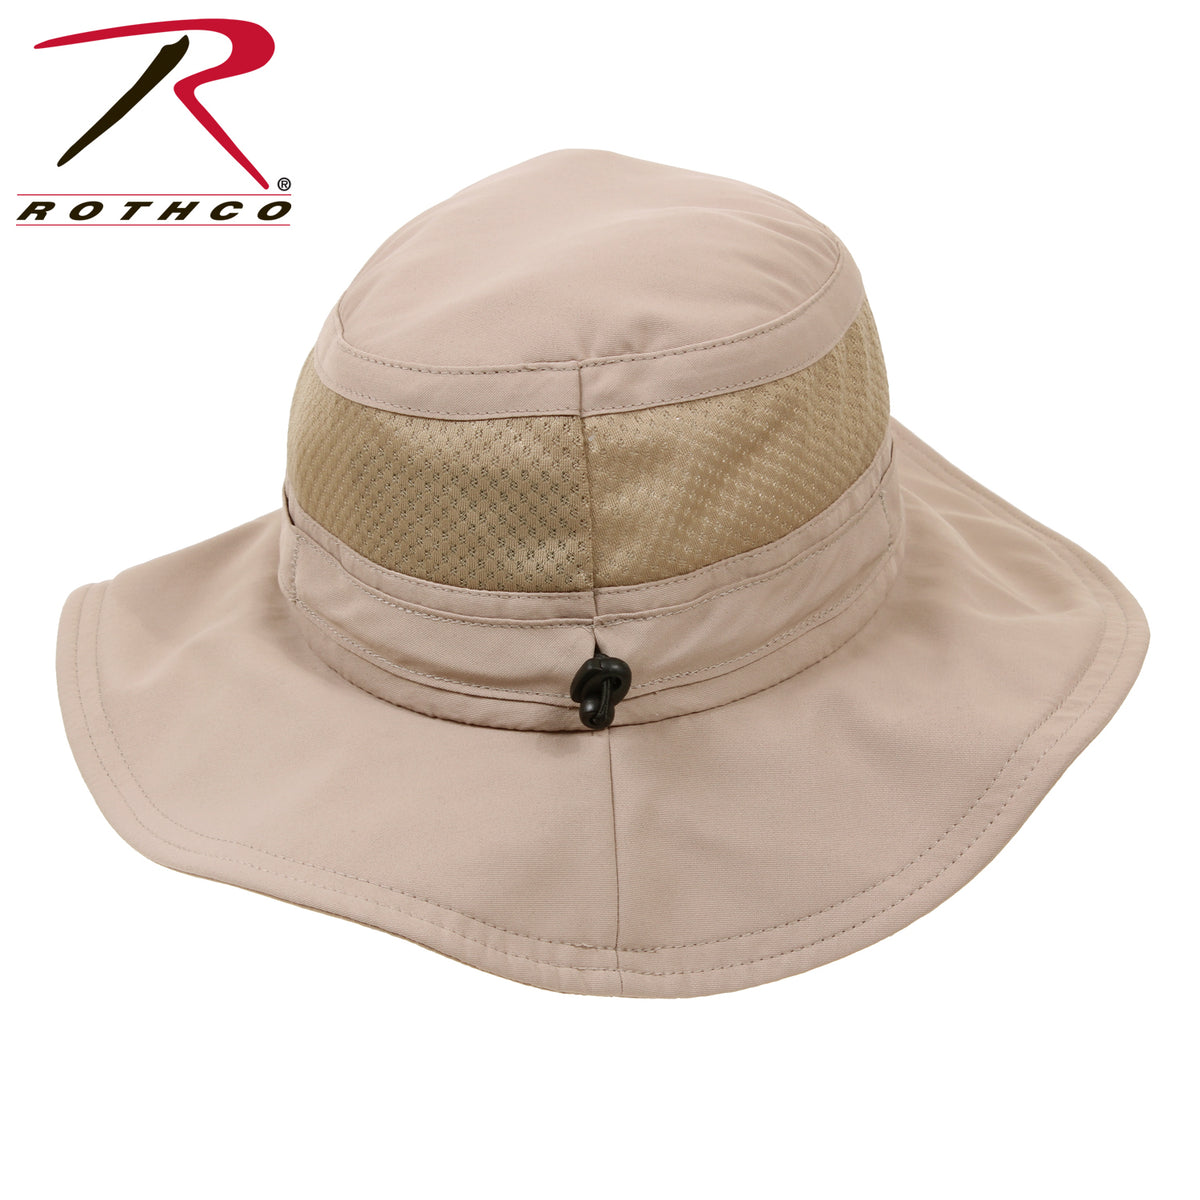 Rothco 52550 adjustable boonie hat - Black